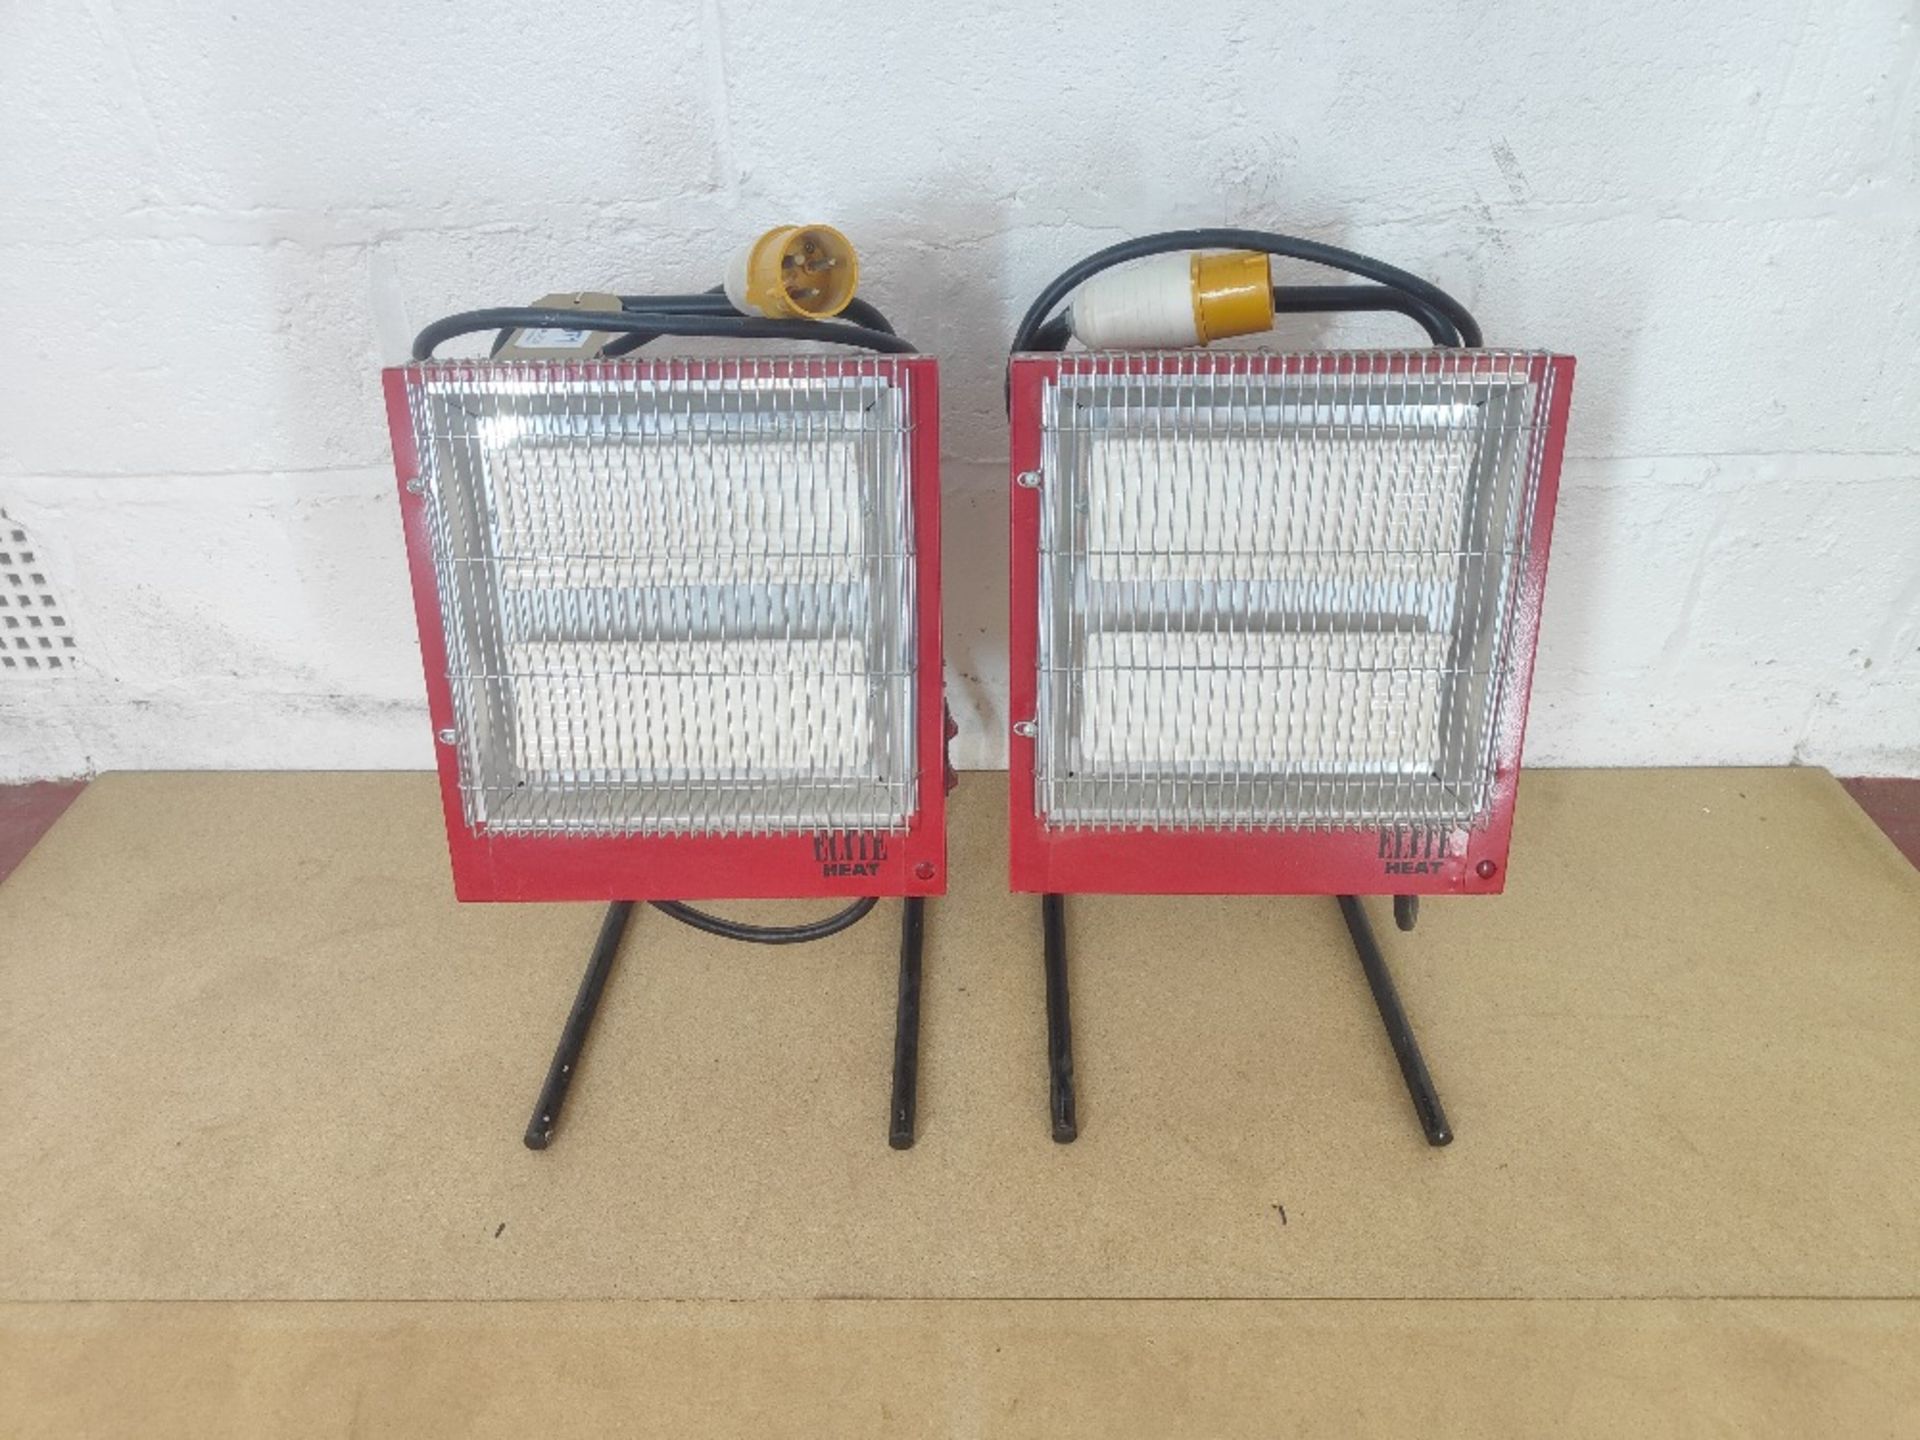 (2) 110V Elite Heat portable infared heaters